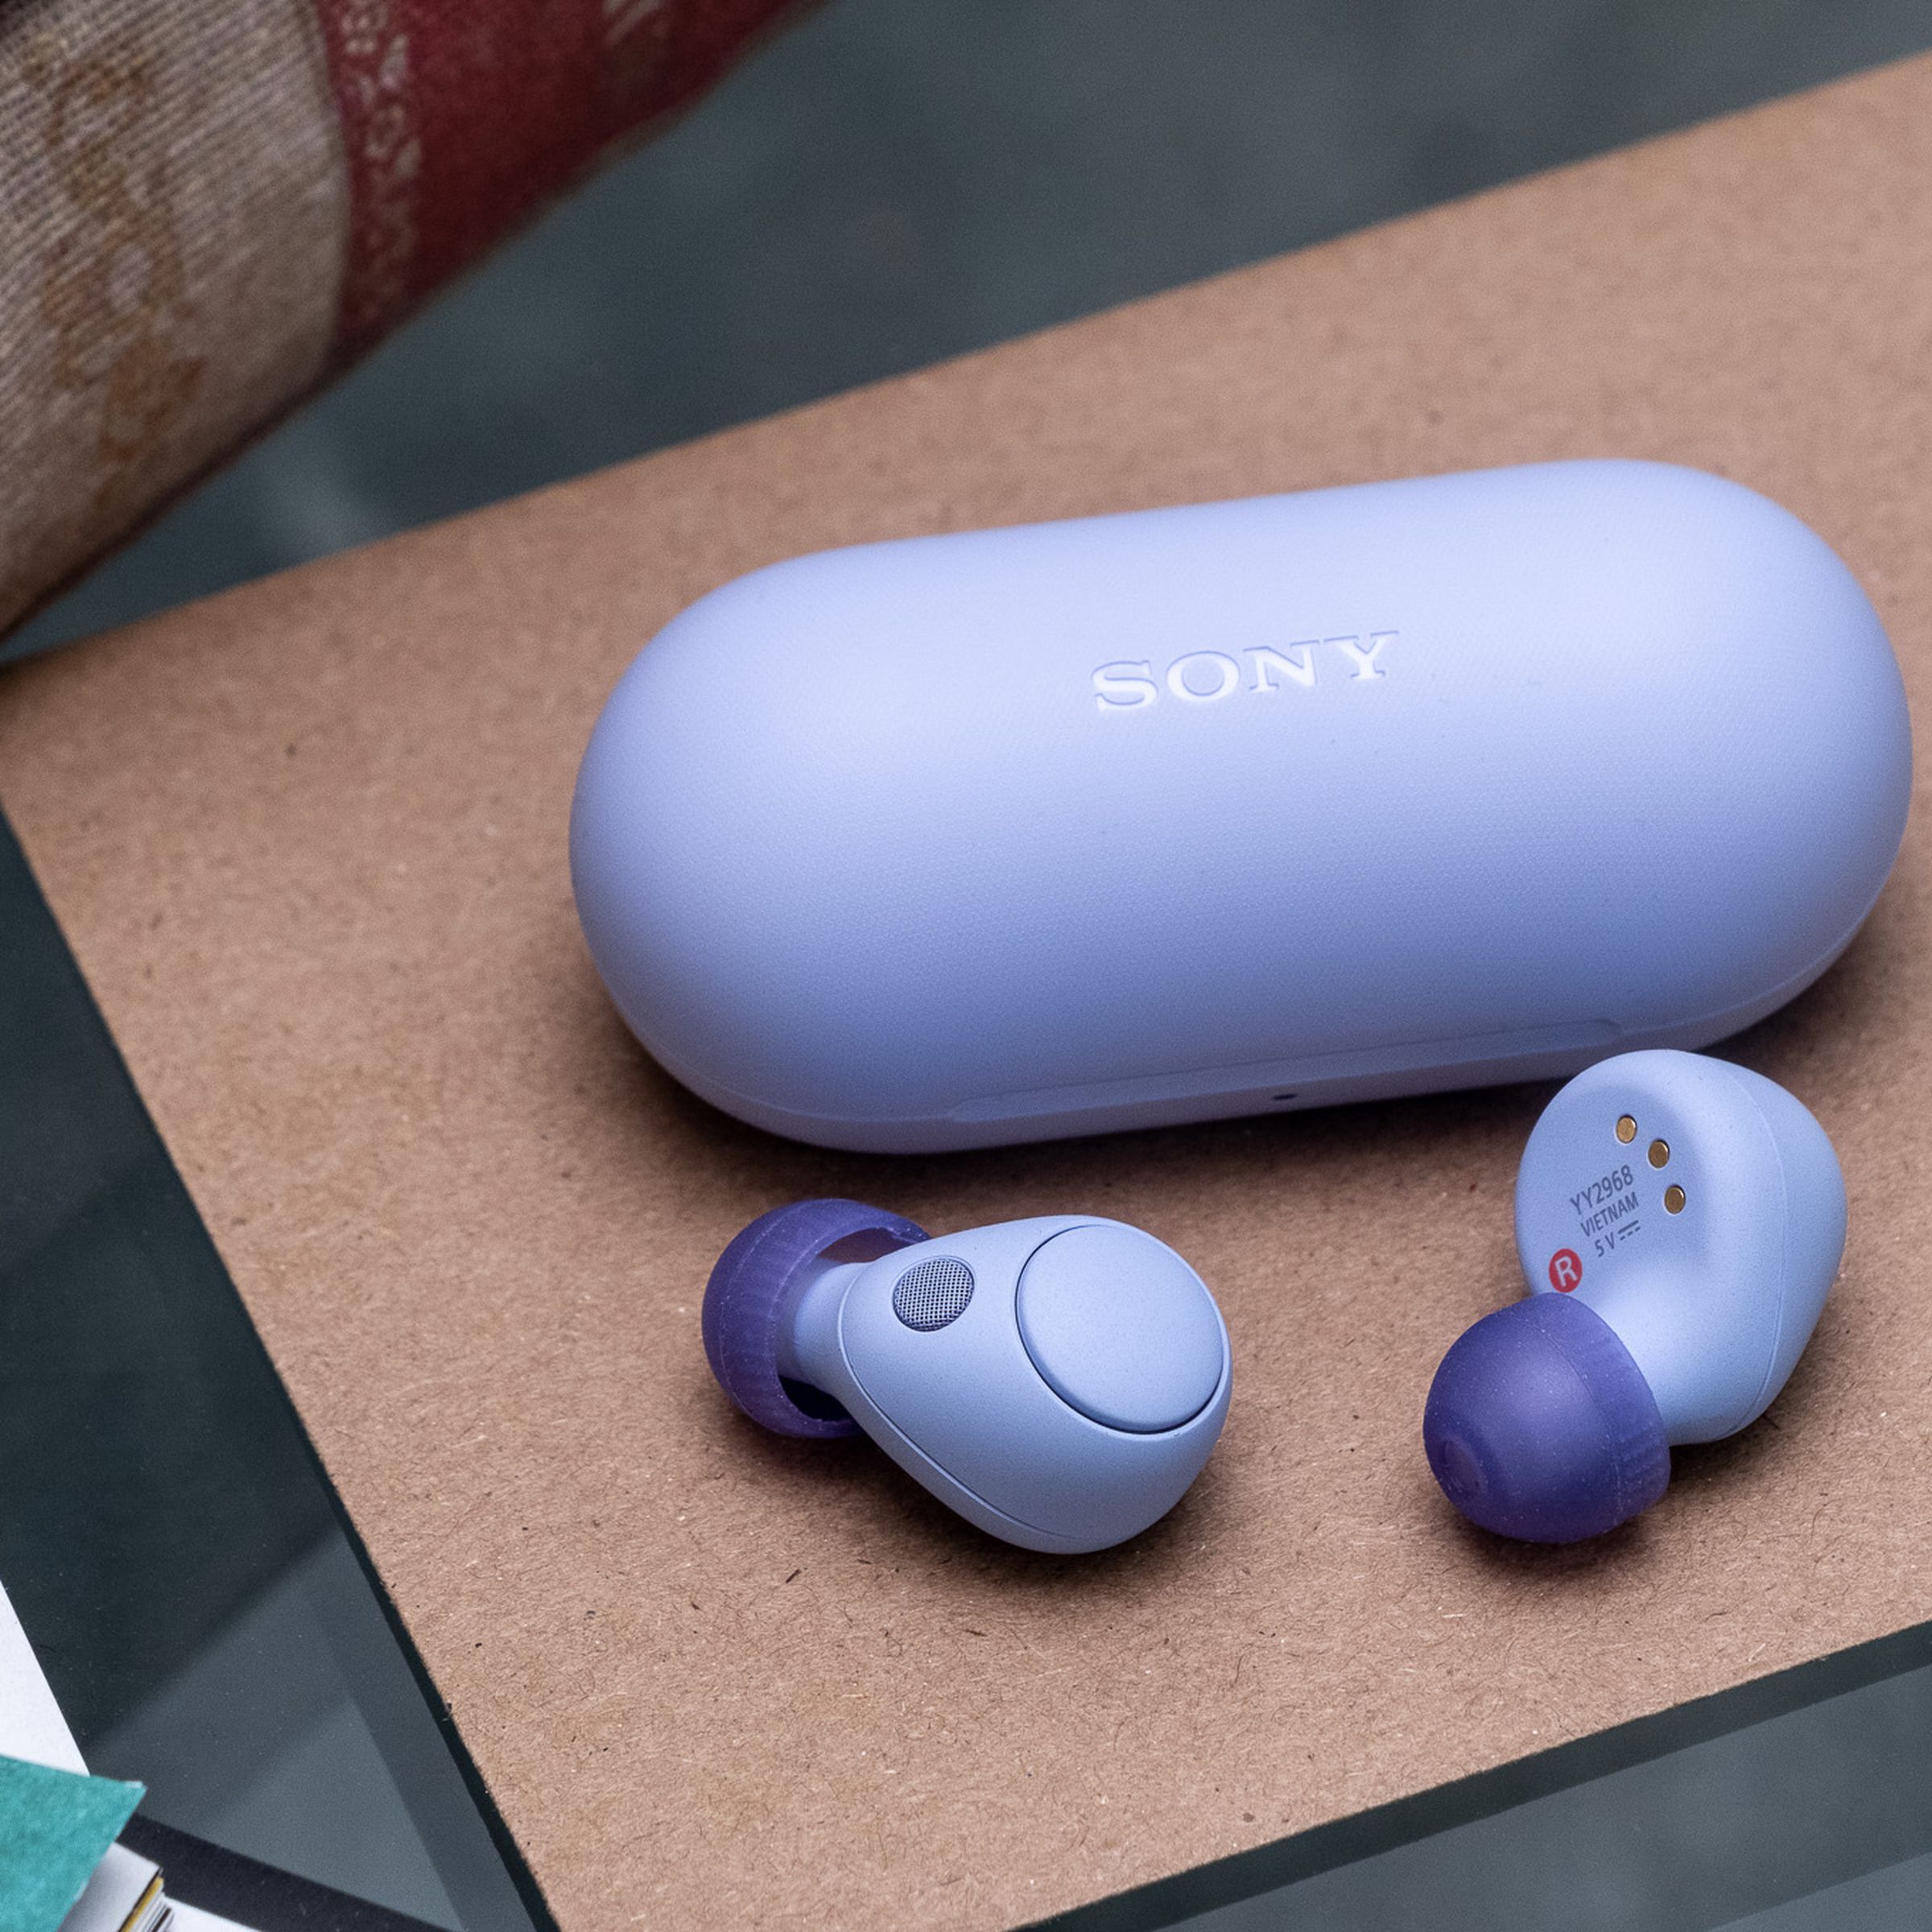 A photo of Sony’s C700N wireless earbuds.